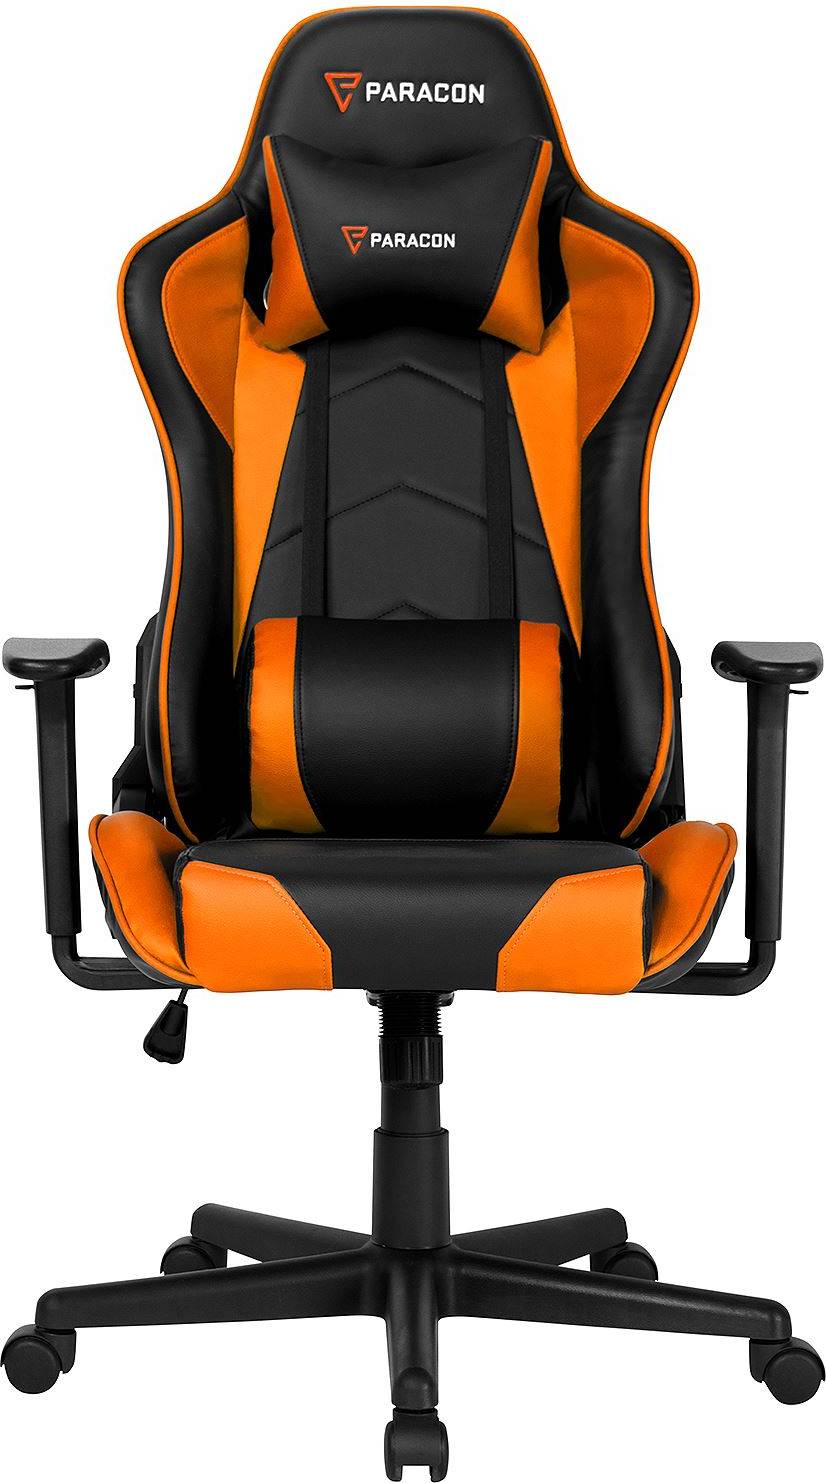  Bild på Paracon Brawler Gaming Chair - Black/Orange gamingstol